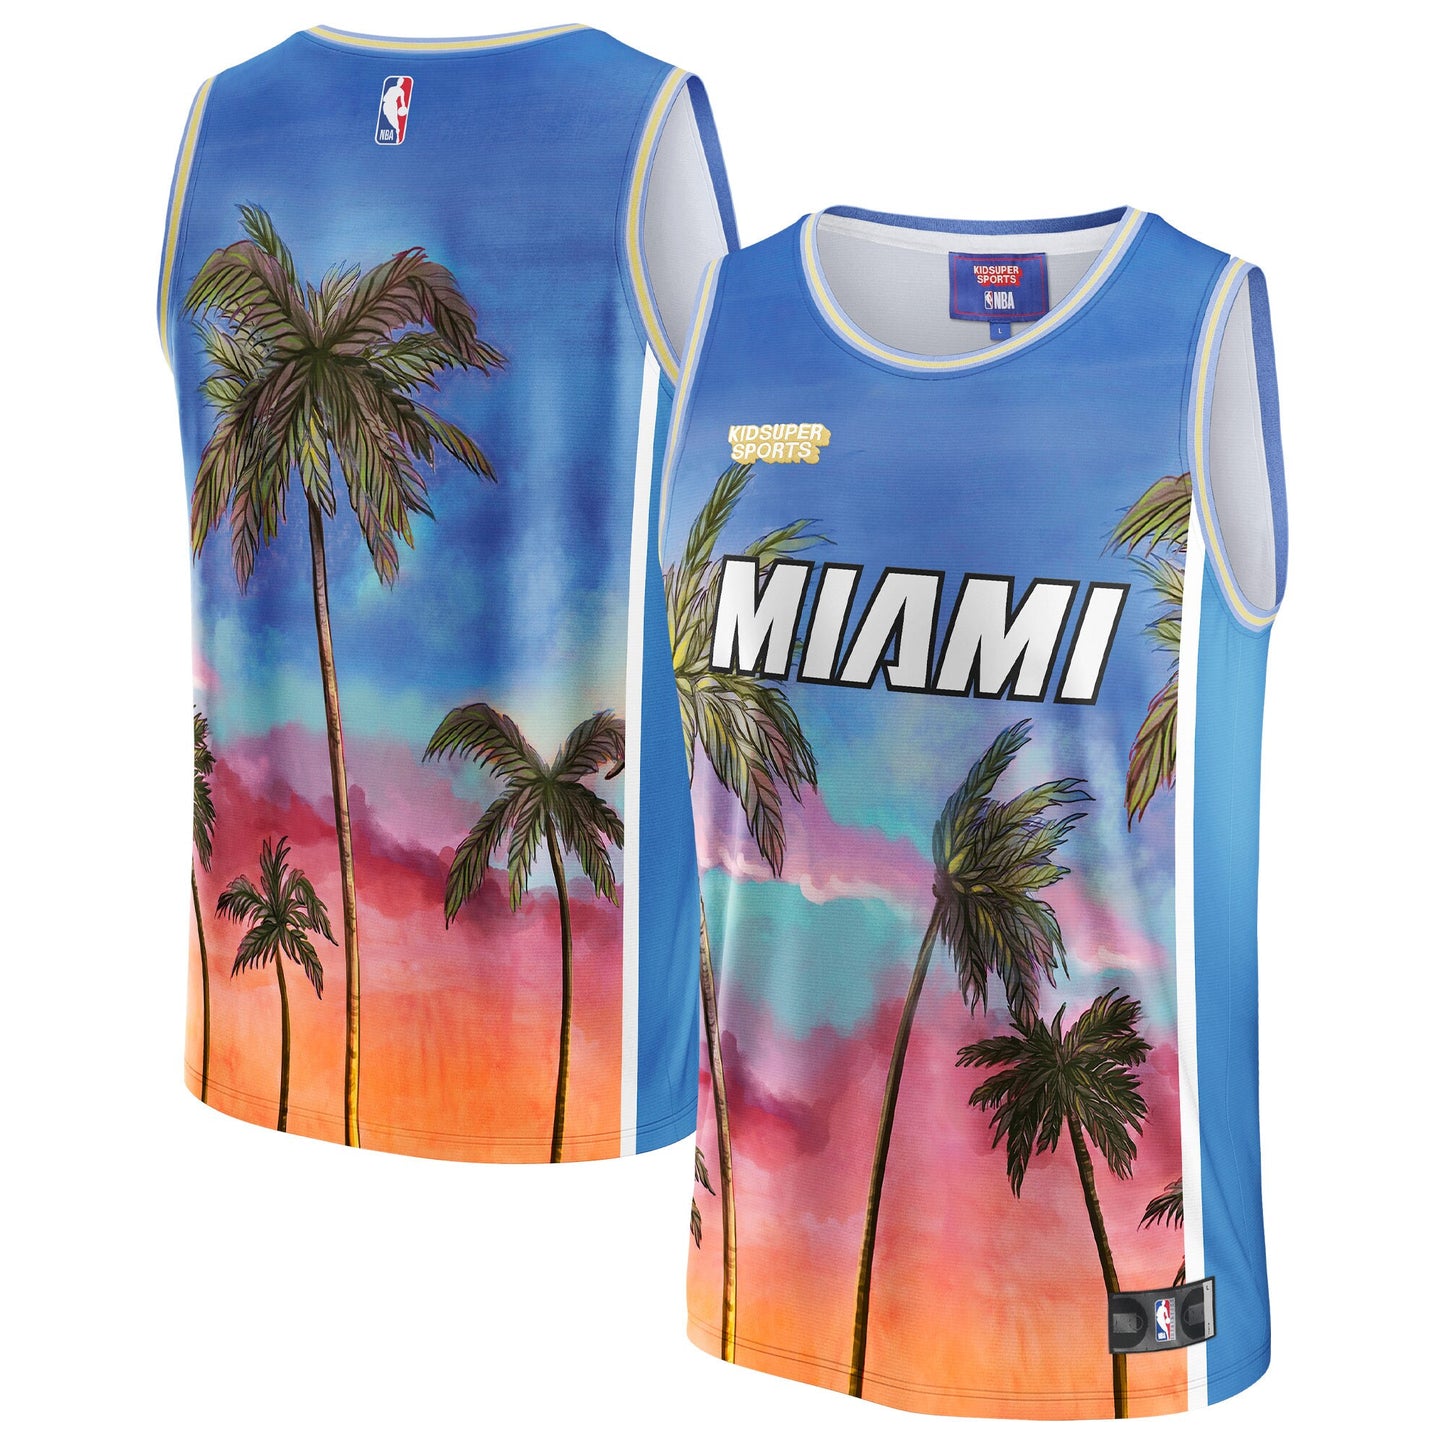 Miami Heat NBA & KidSuper Studios by Fanatics Unisex Hometown Jersey - Blue